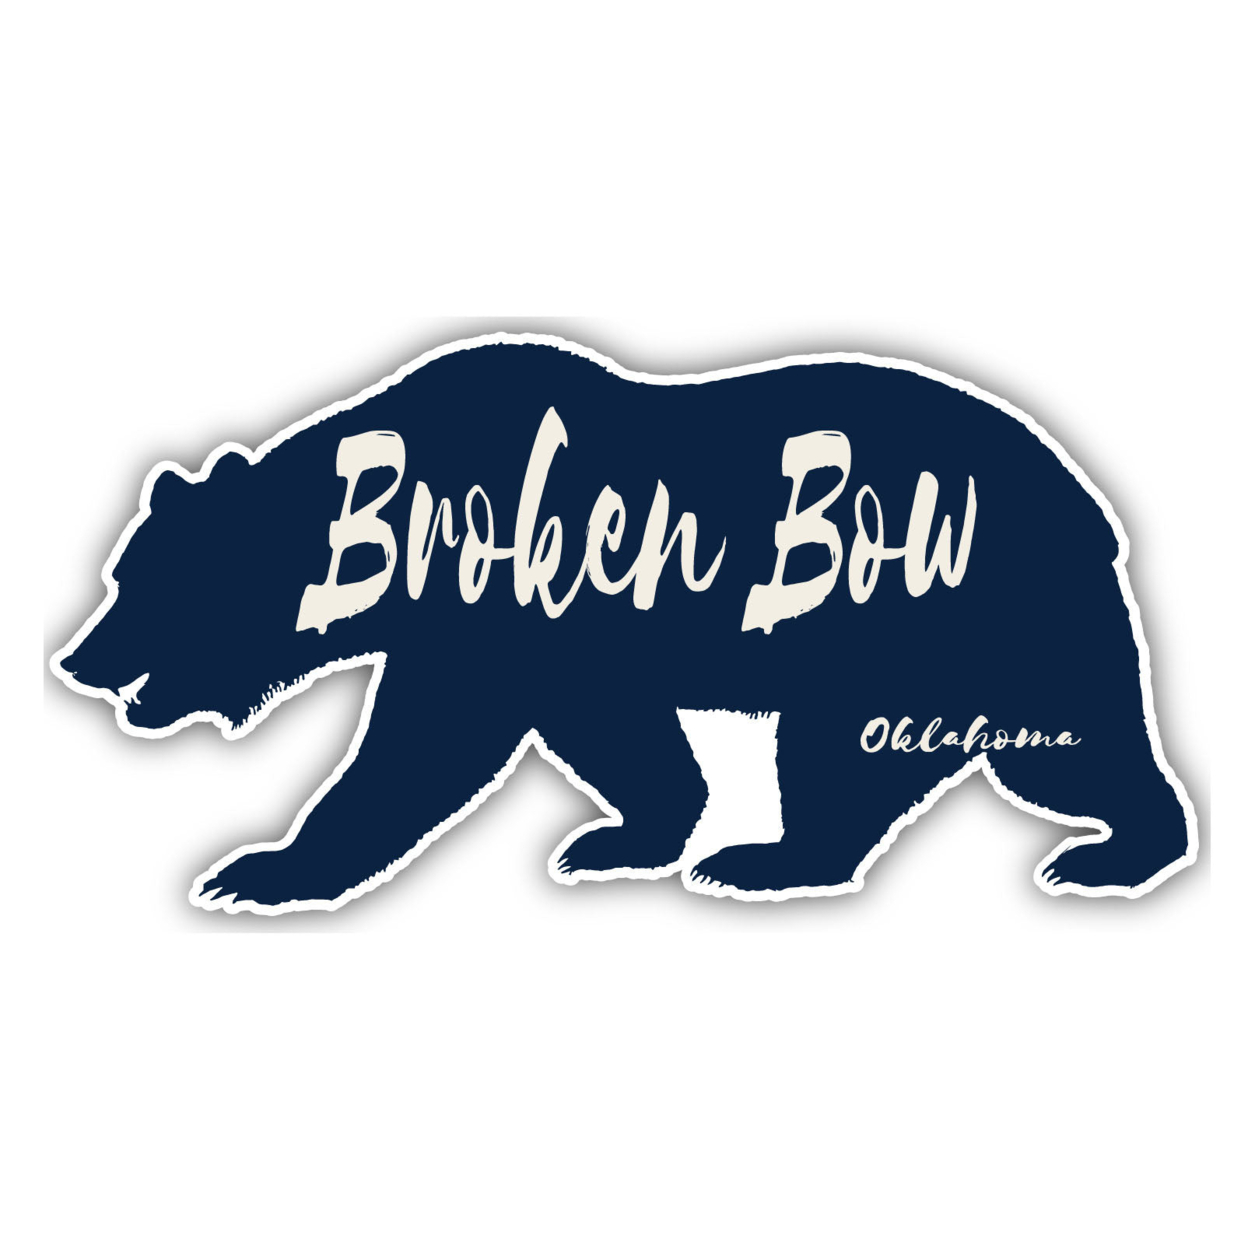 Broken Bow Oklahoma Souvenir Decorative Stickers (Choose Theme And Size) - Single Unit, 2-Inch, Bear